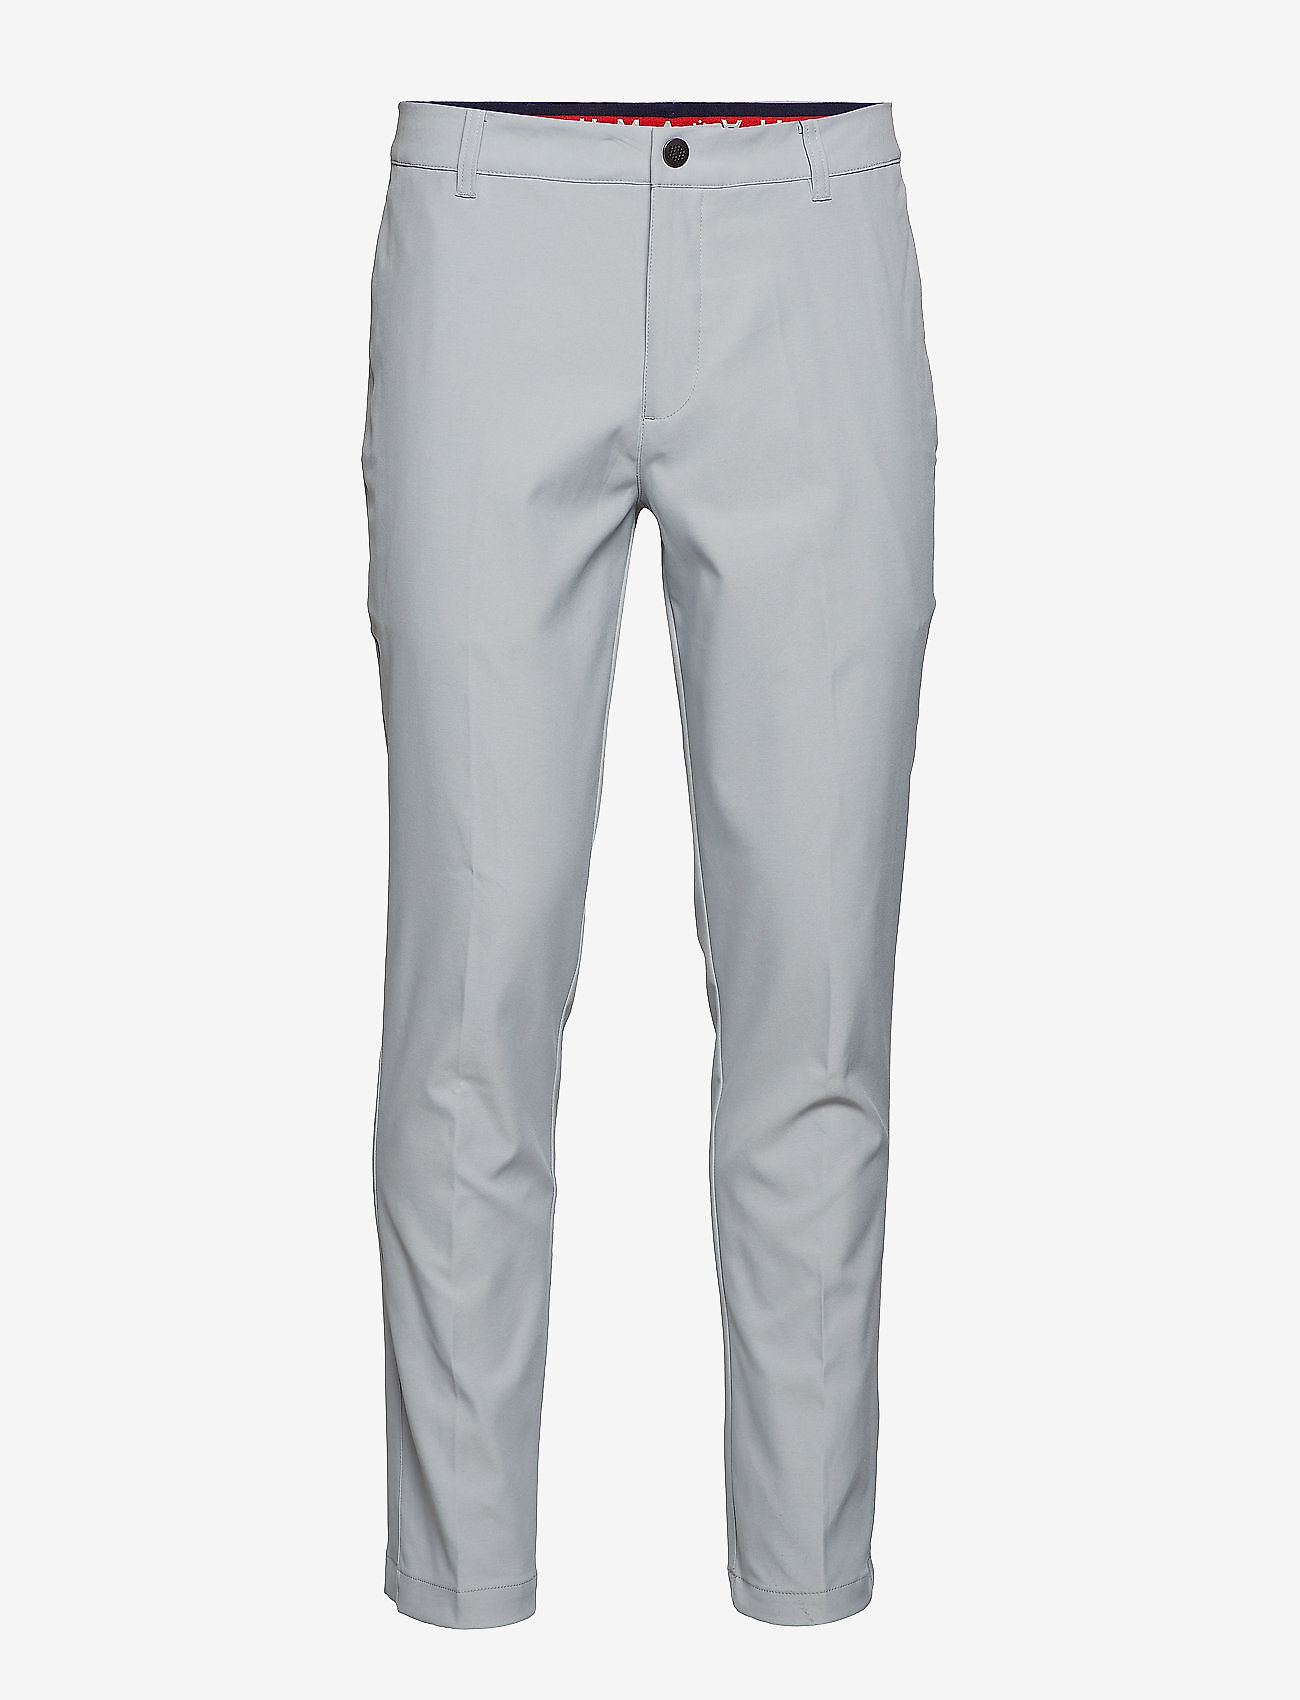 tailored jackpot golf pants